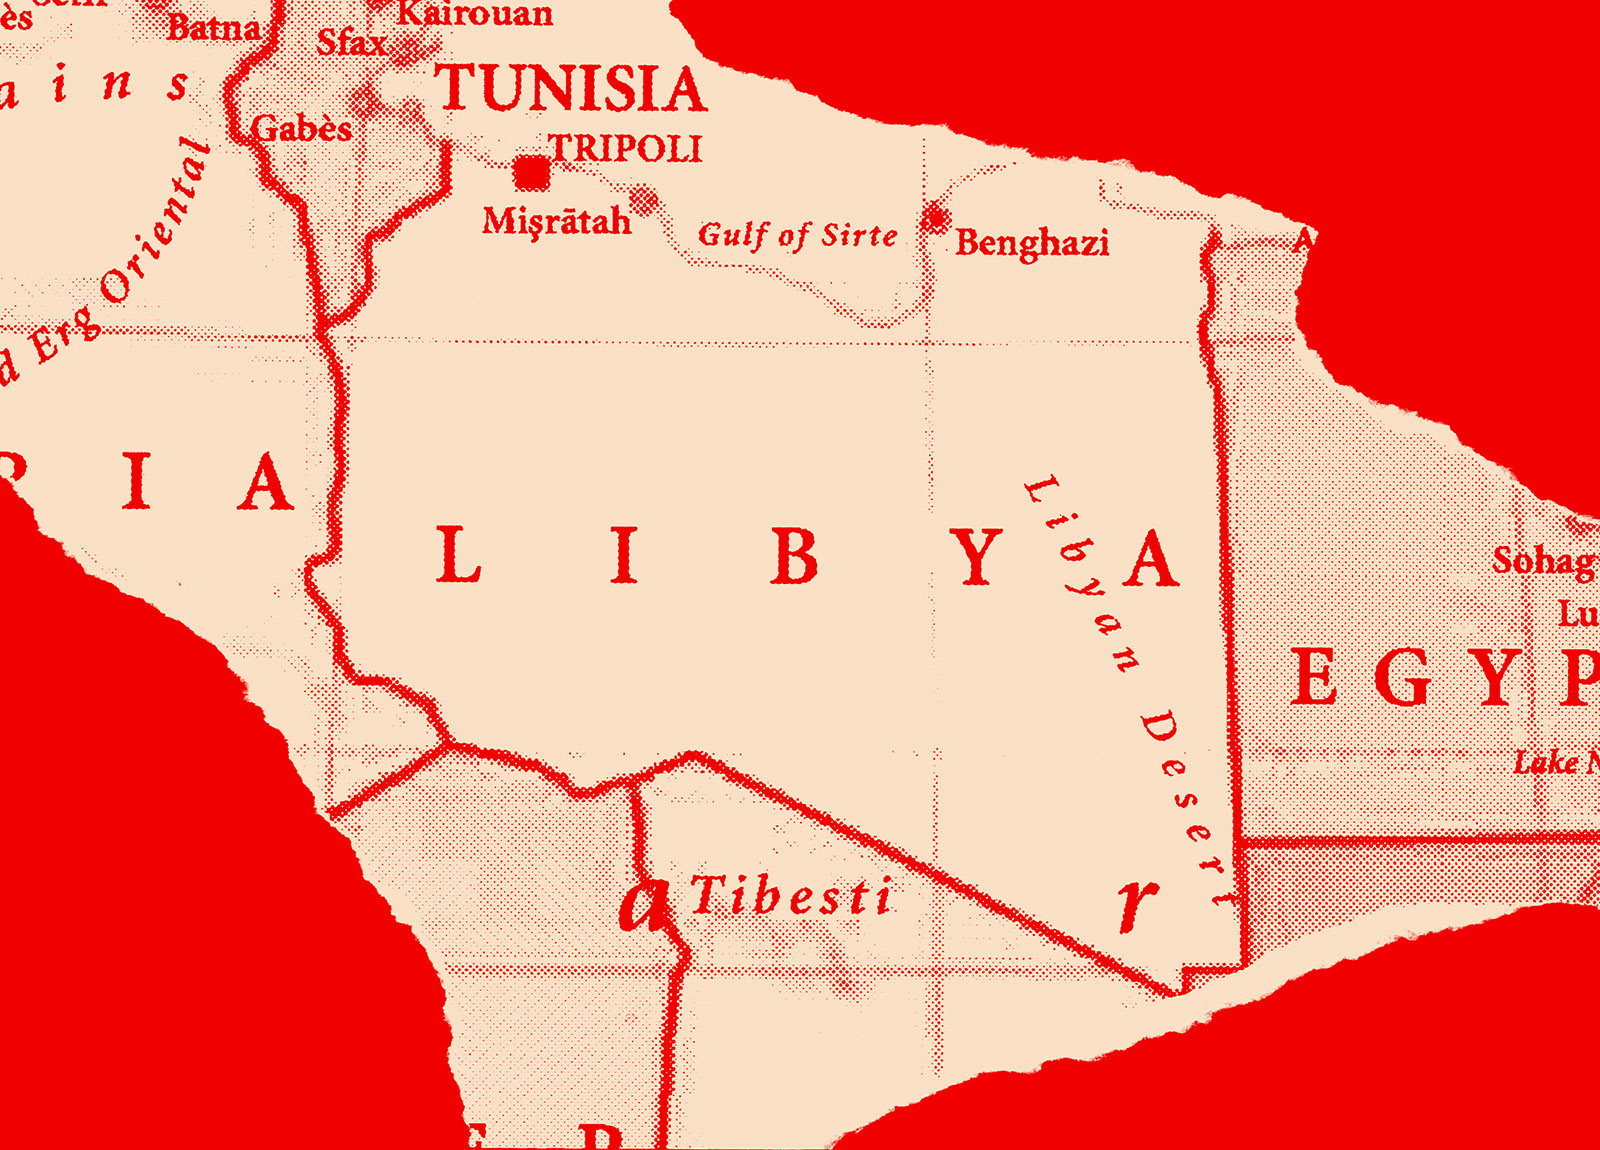 https://newyorkwarcrimes.com/media/pages/libya-2011/dc00981cd4-1709844480/history-libya-header.jpg